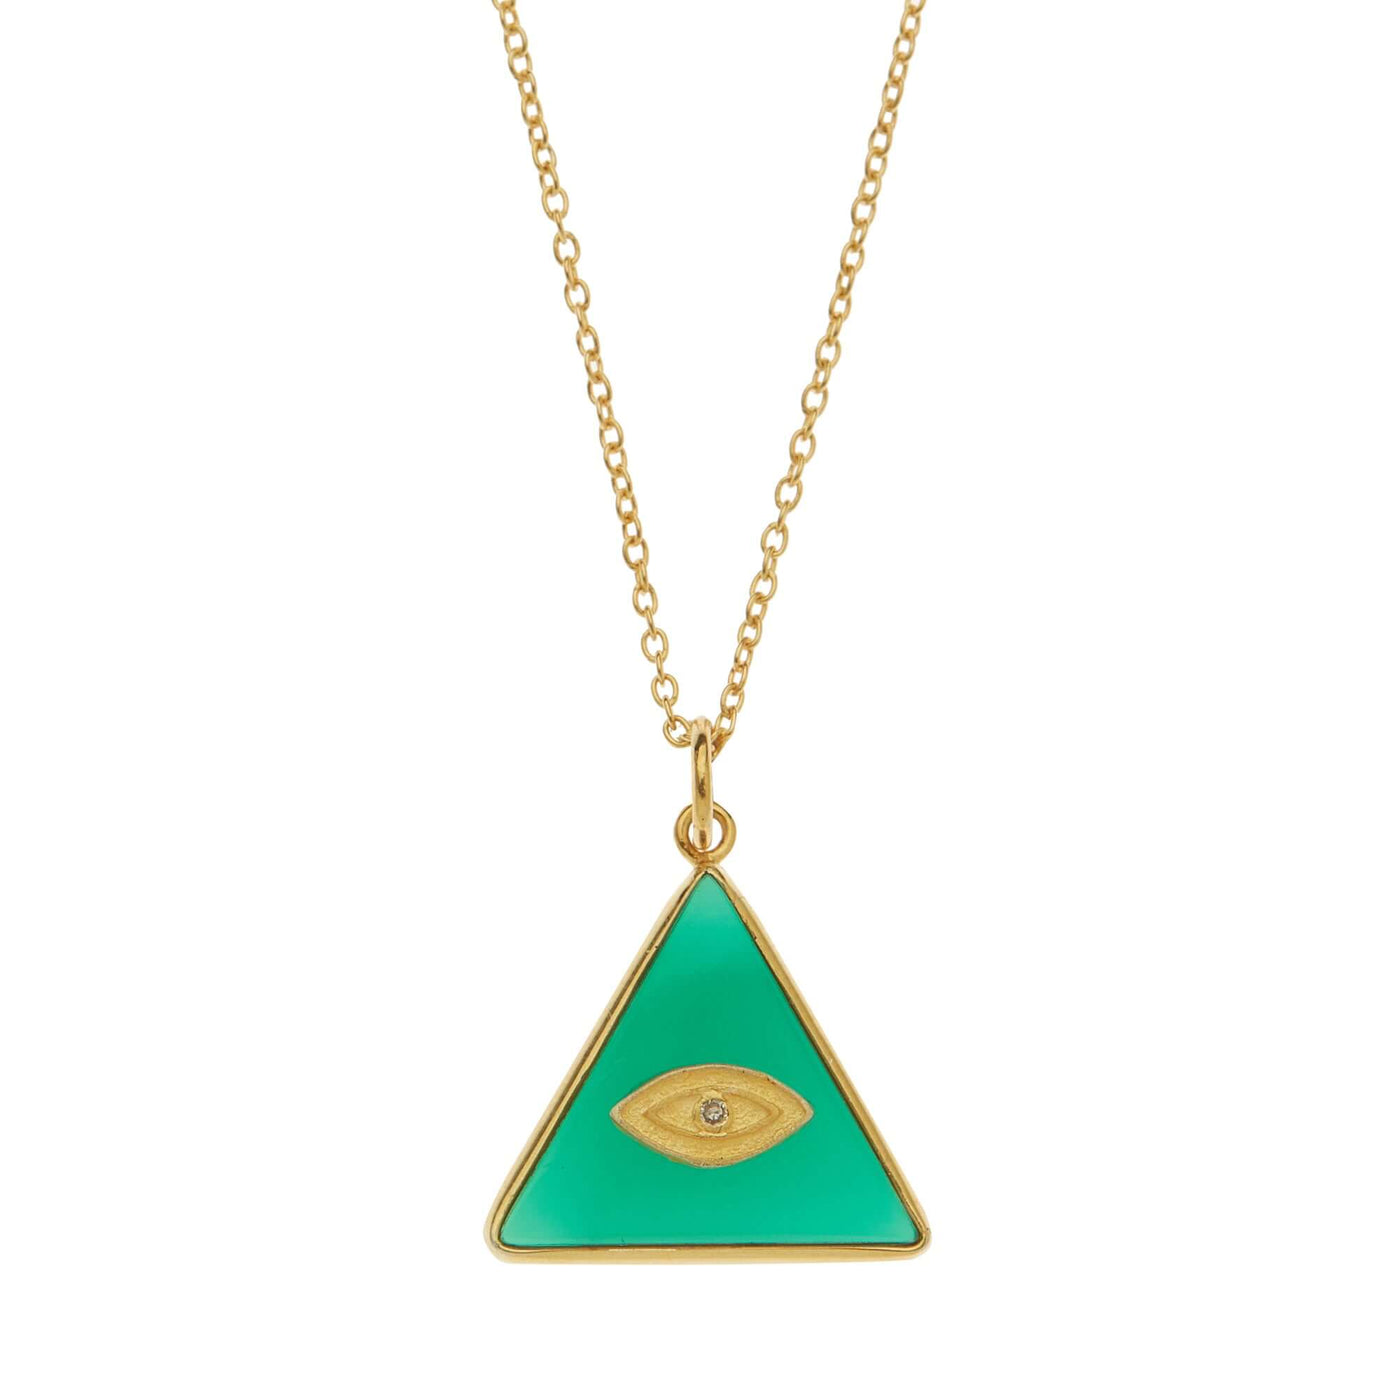 All Seeing Triangle Eye Necklace with Green Onyx - Eye M by Ileana Makri